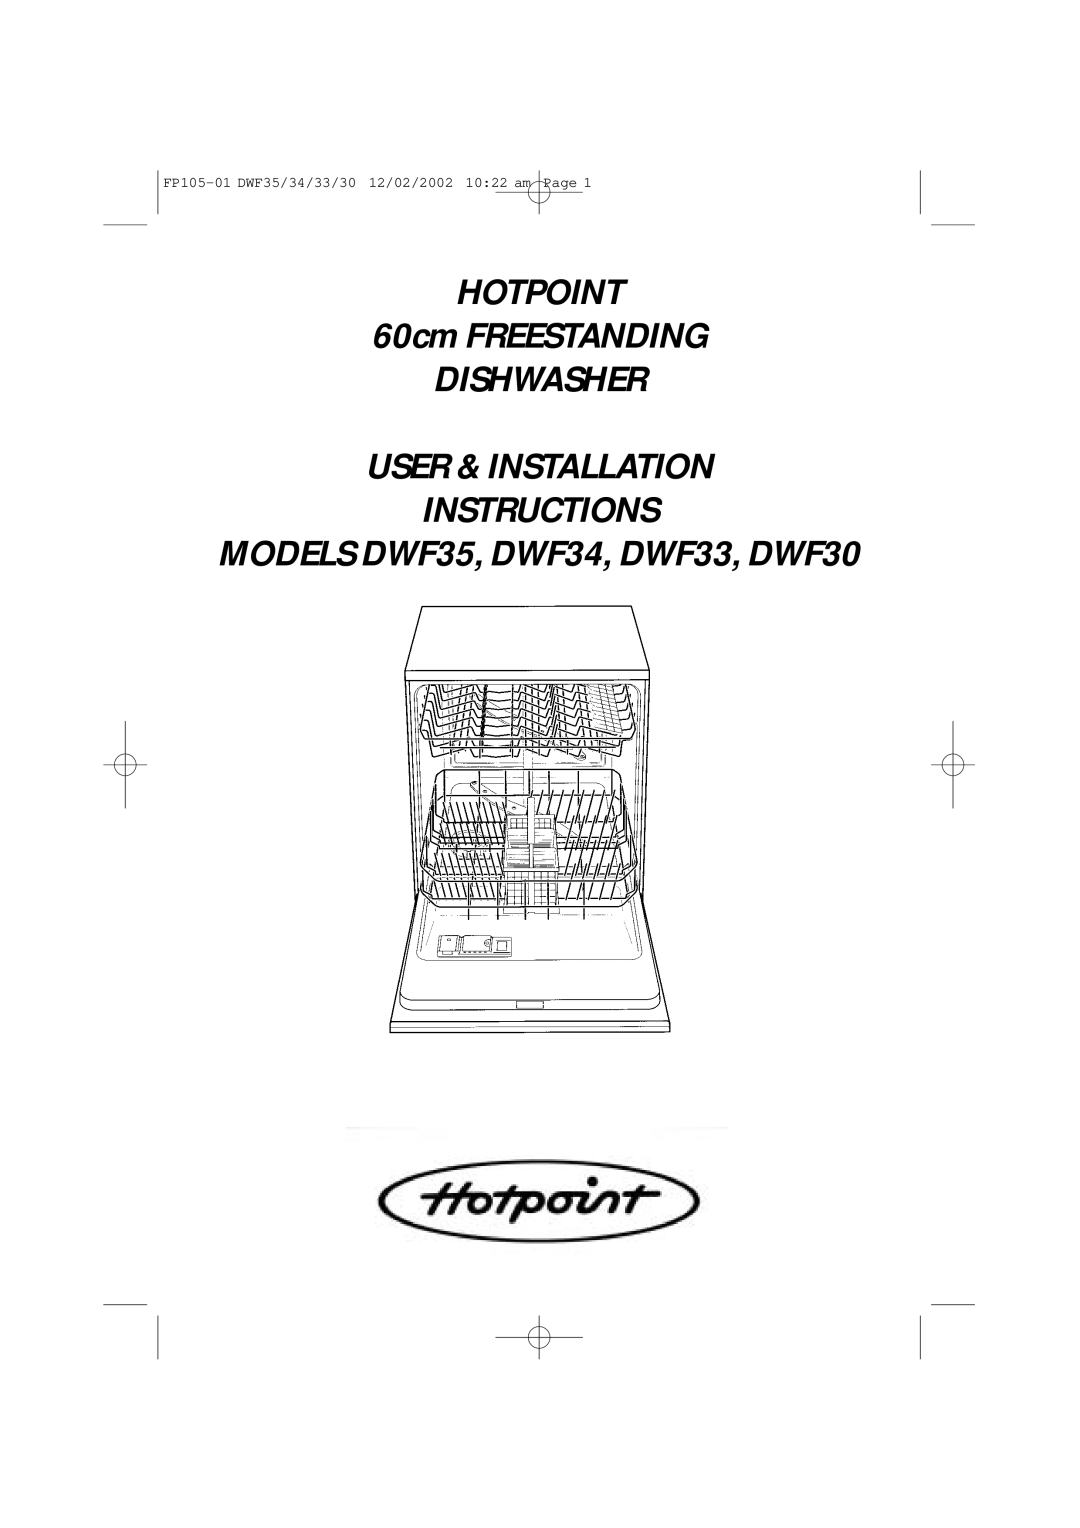 Hotpoint DWF34, DWF35 installation instructions HOTPOINT 60cm FREESTANDING DISHWASHER, User & Installation Instructions 